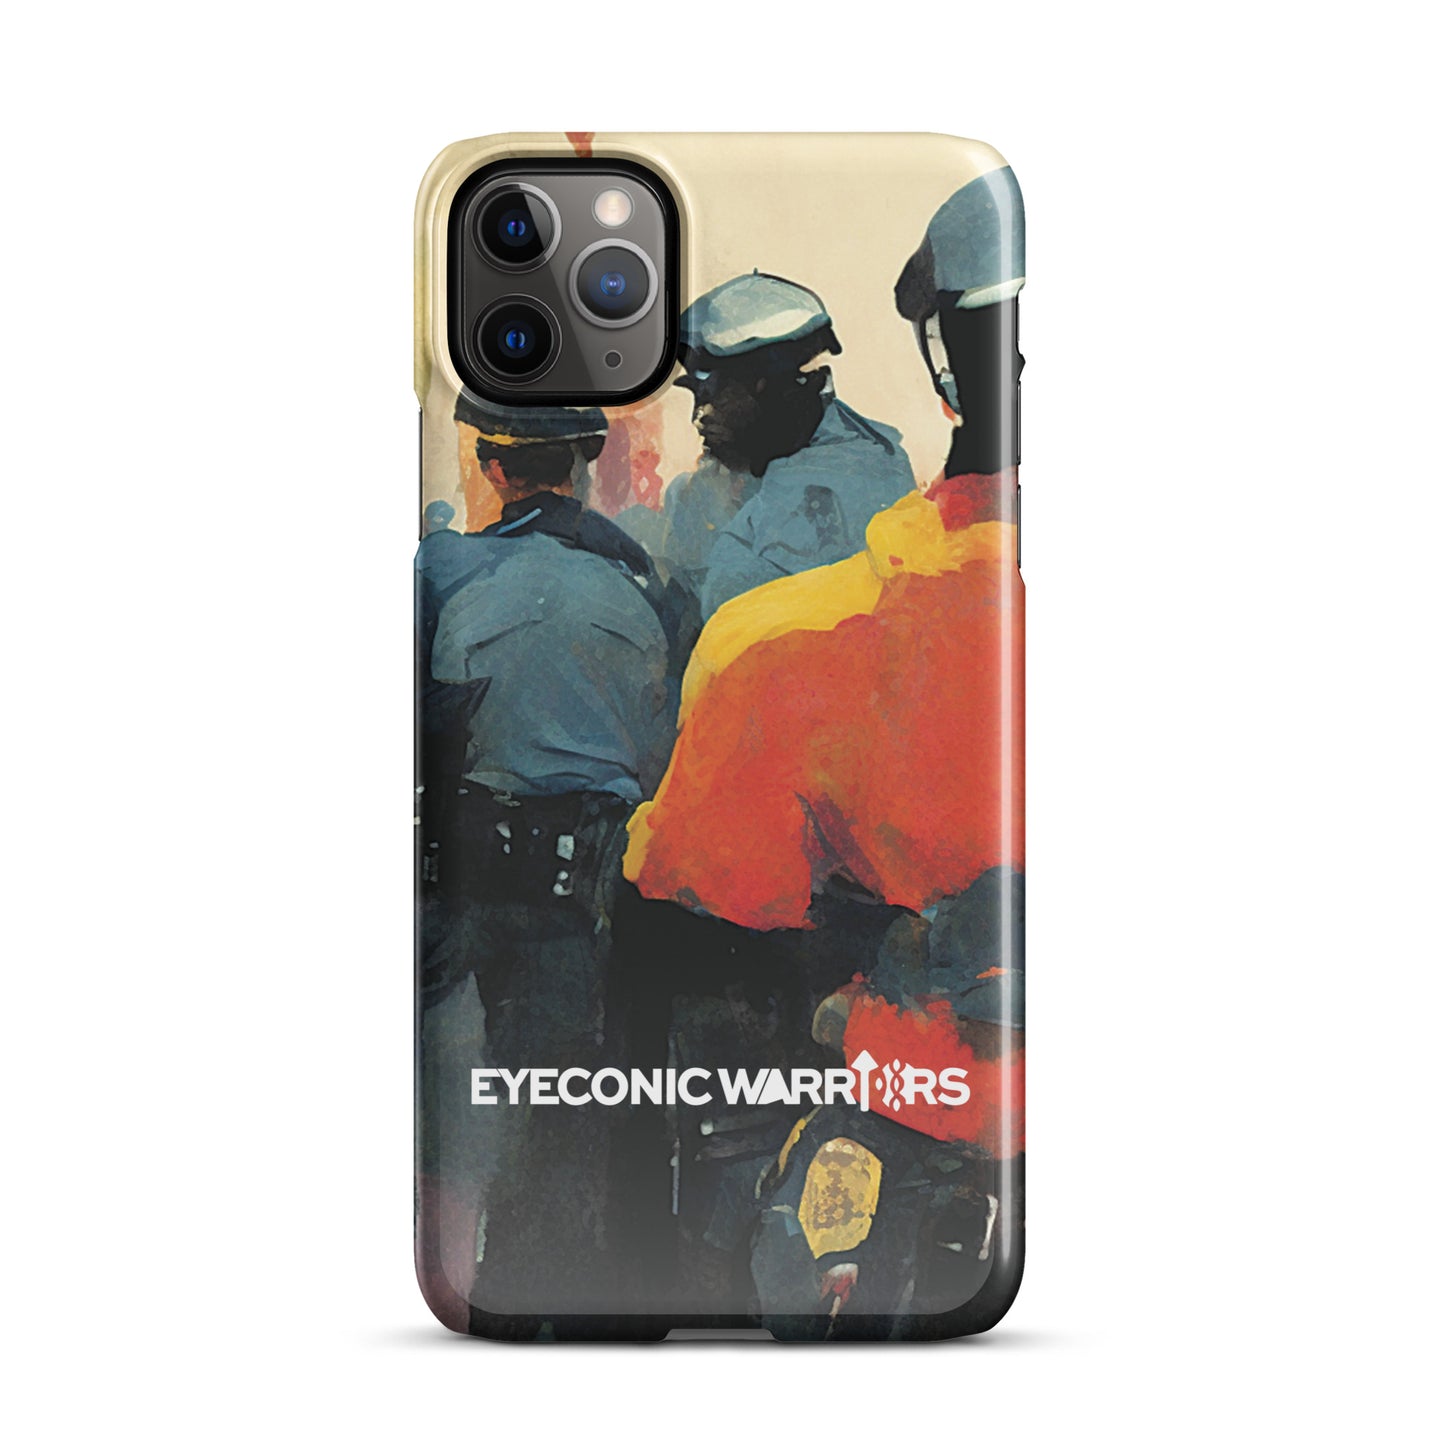 Police Brutality Awareness Custom iPhone Case - Art for Change